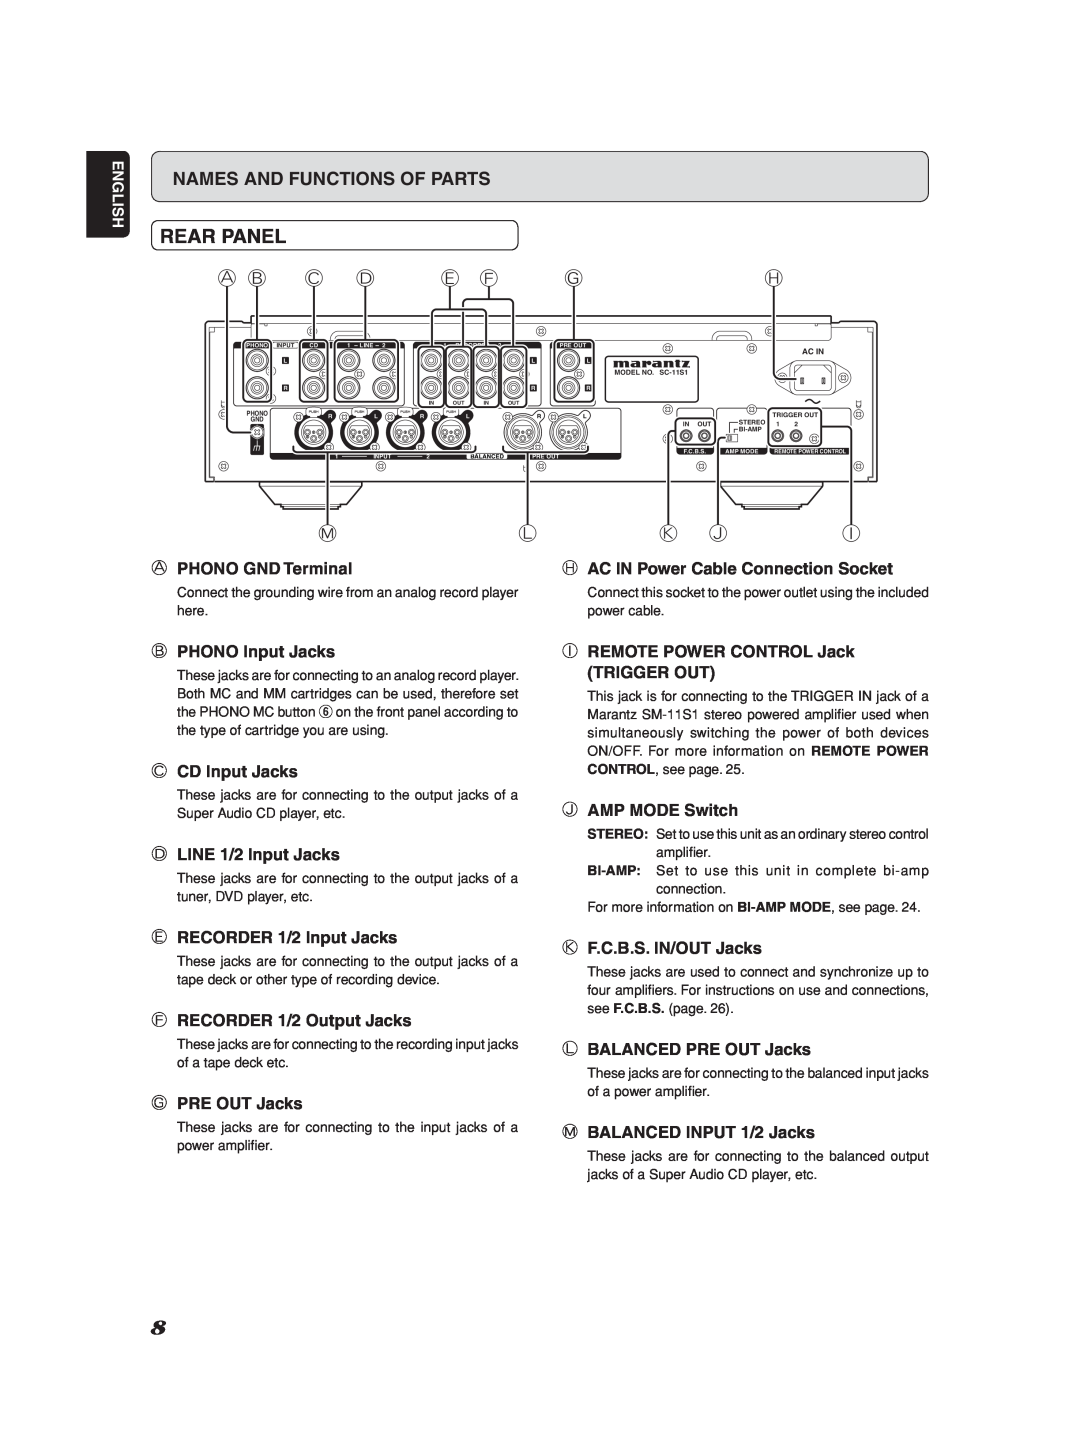 Marantz Model SC-11S1 manual Rear Panel, Names And Functions Of Parts 